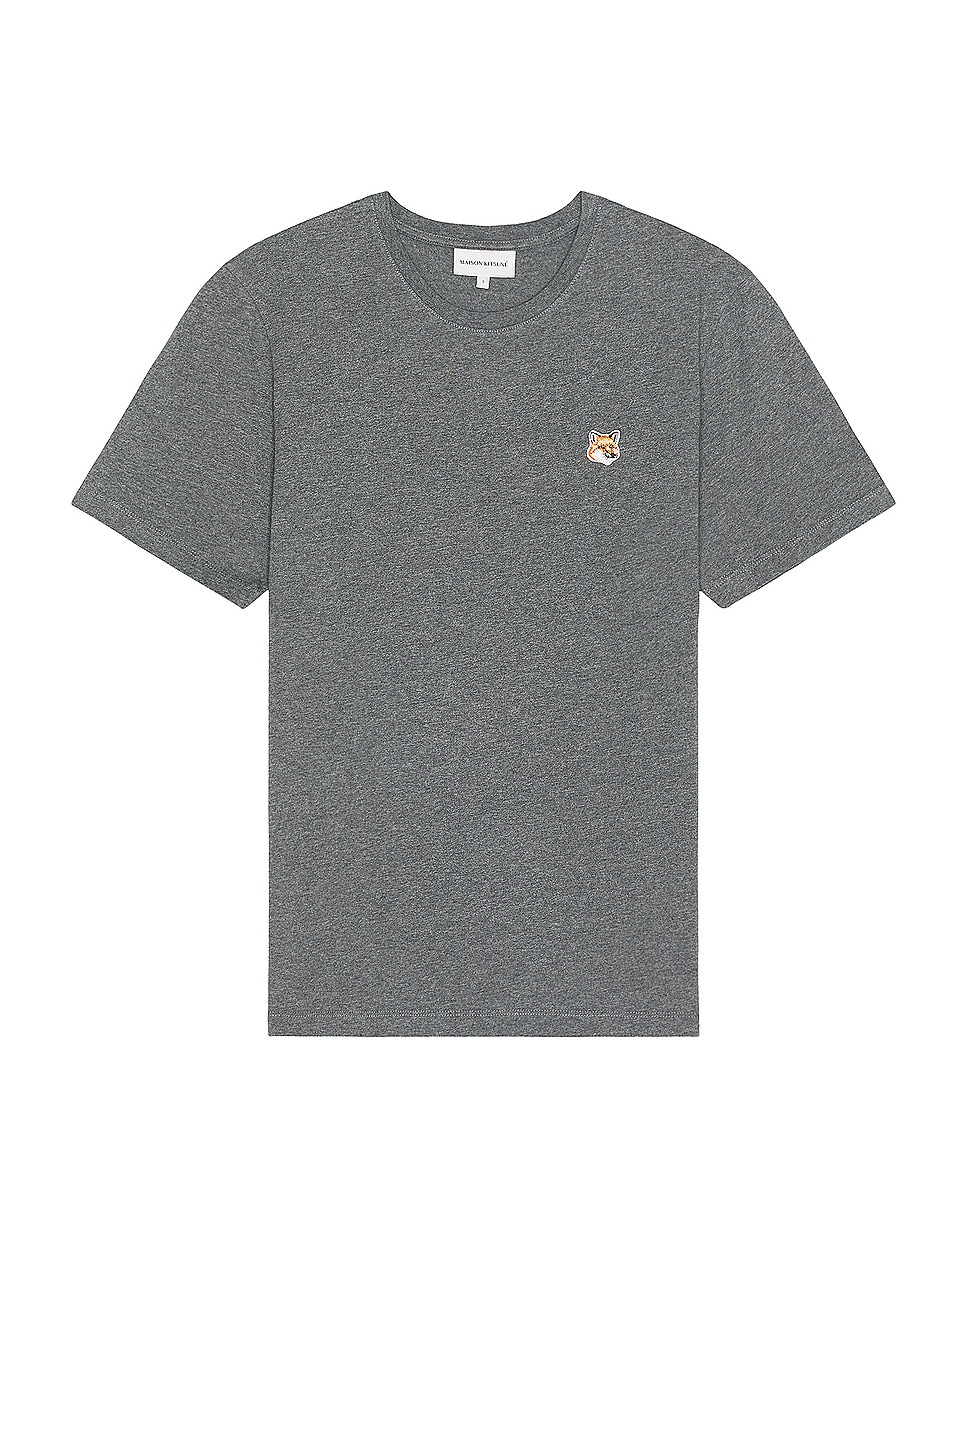 Image 1 of Maison Kitsune Fox Head Patch Regular T-shirt in Dark Grey Melange